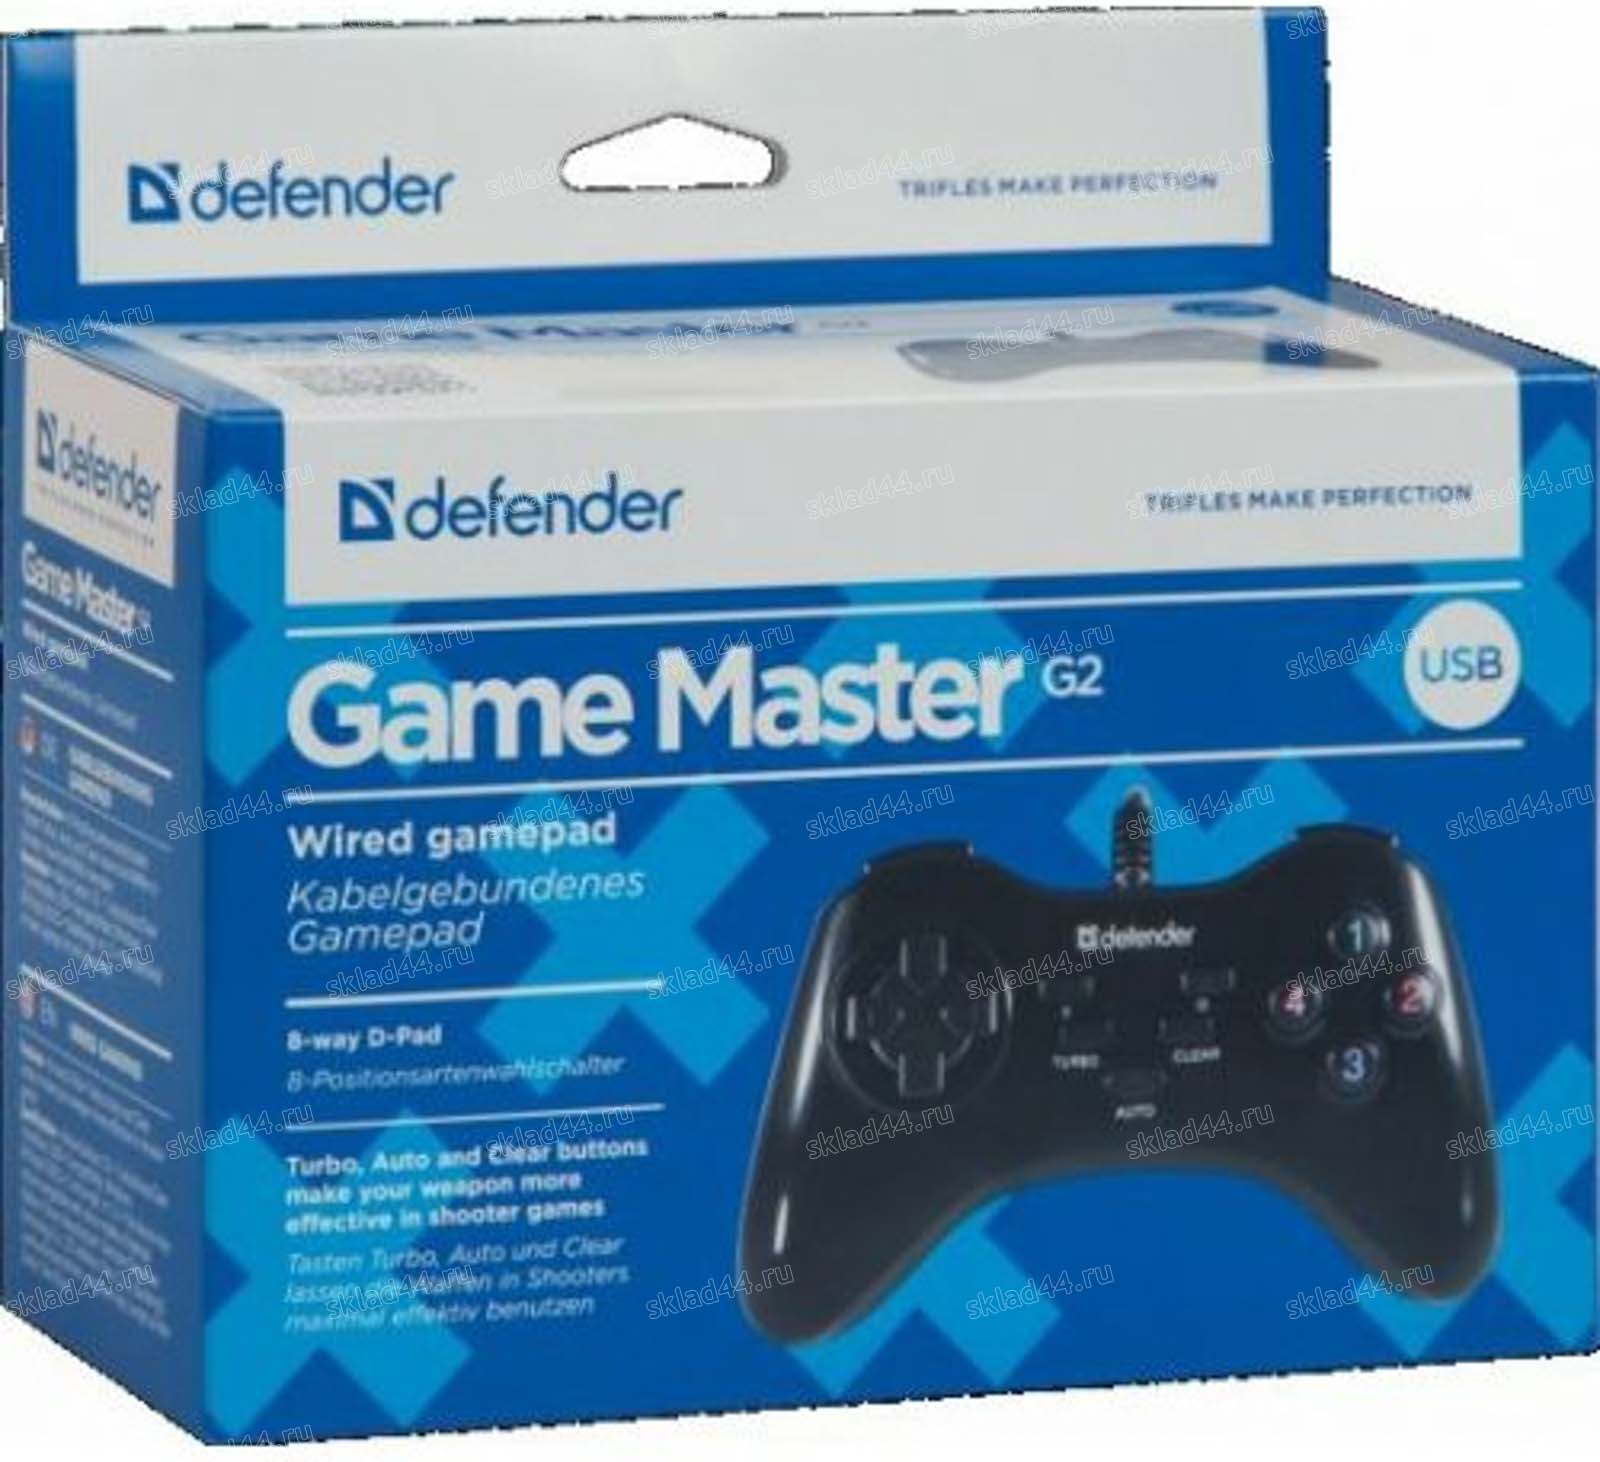 Defender master. Геймпад Defender g2. Джойстик Дефендер проводной. Геймпад Дефендер гейм мастер. Геймпад проводной Defender game Master g2 13 кнопок USB ПК ps3.